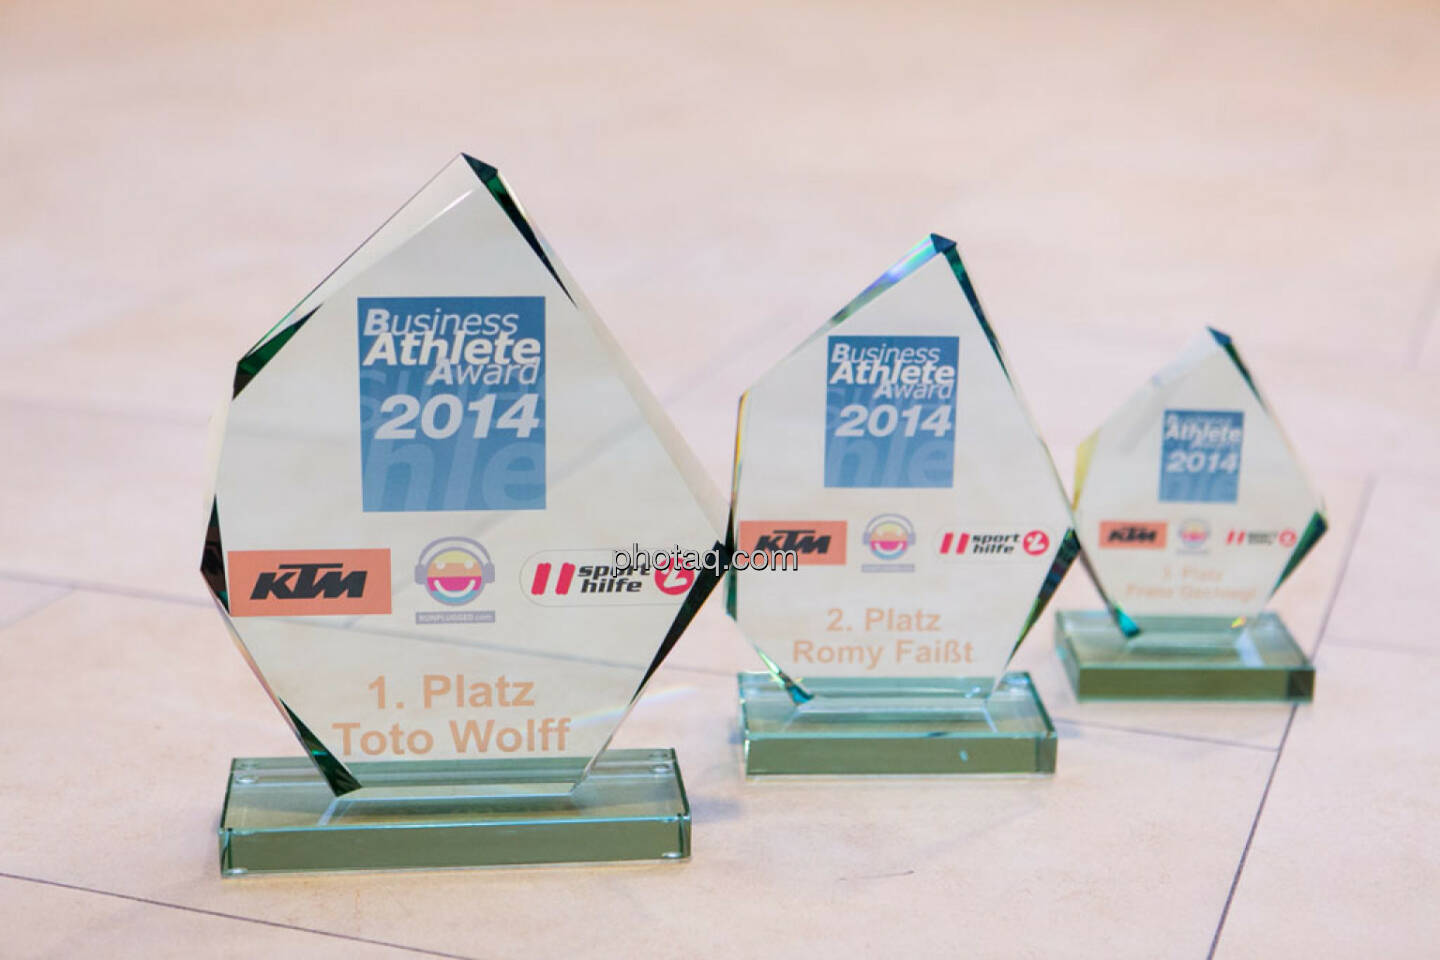 Runplugged Business Athlete Award 2014, die Awards